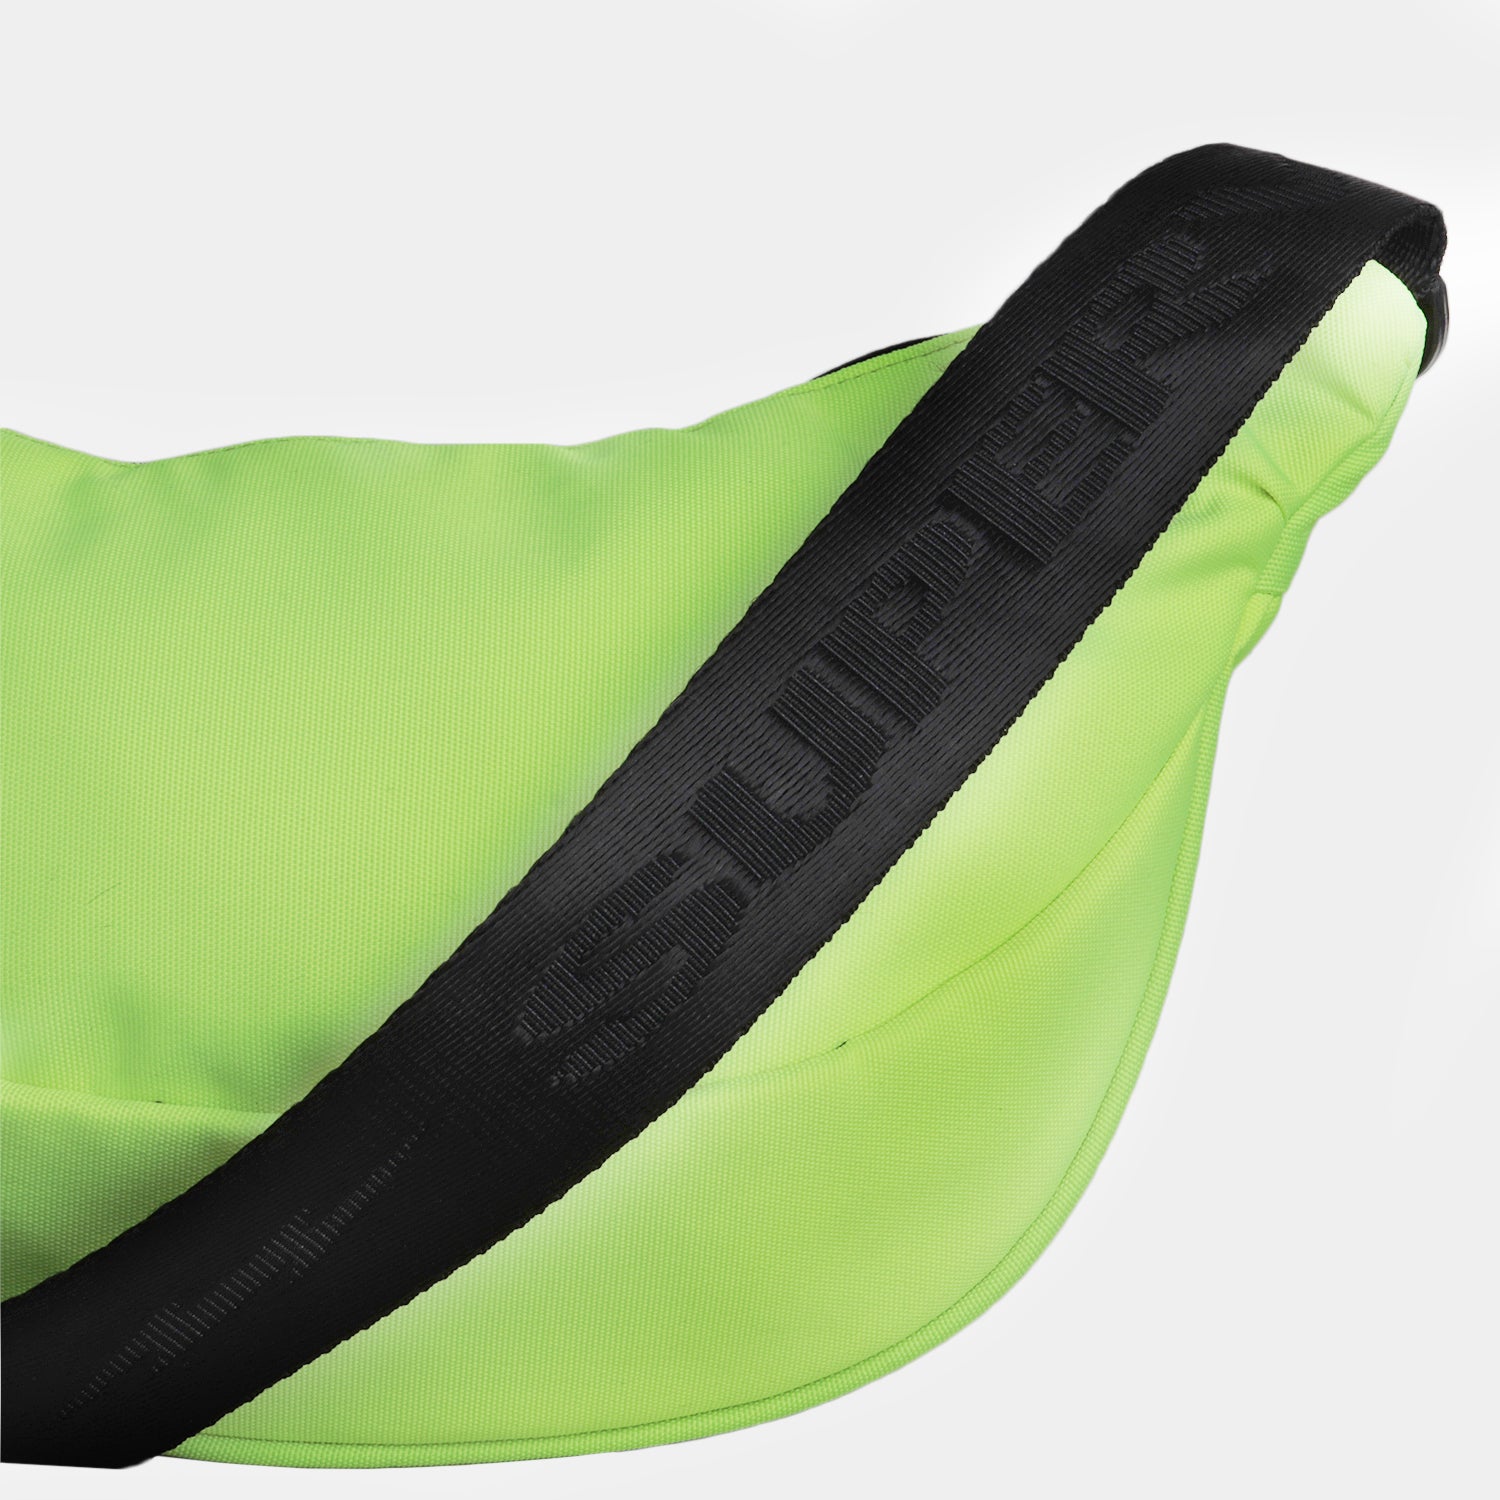 Supervek Crossbody Slinger - Vetric Lime - Urban Functional Fanny Hip Bag for Everyday Essentials - Belt Design